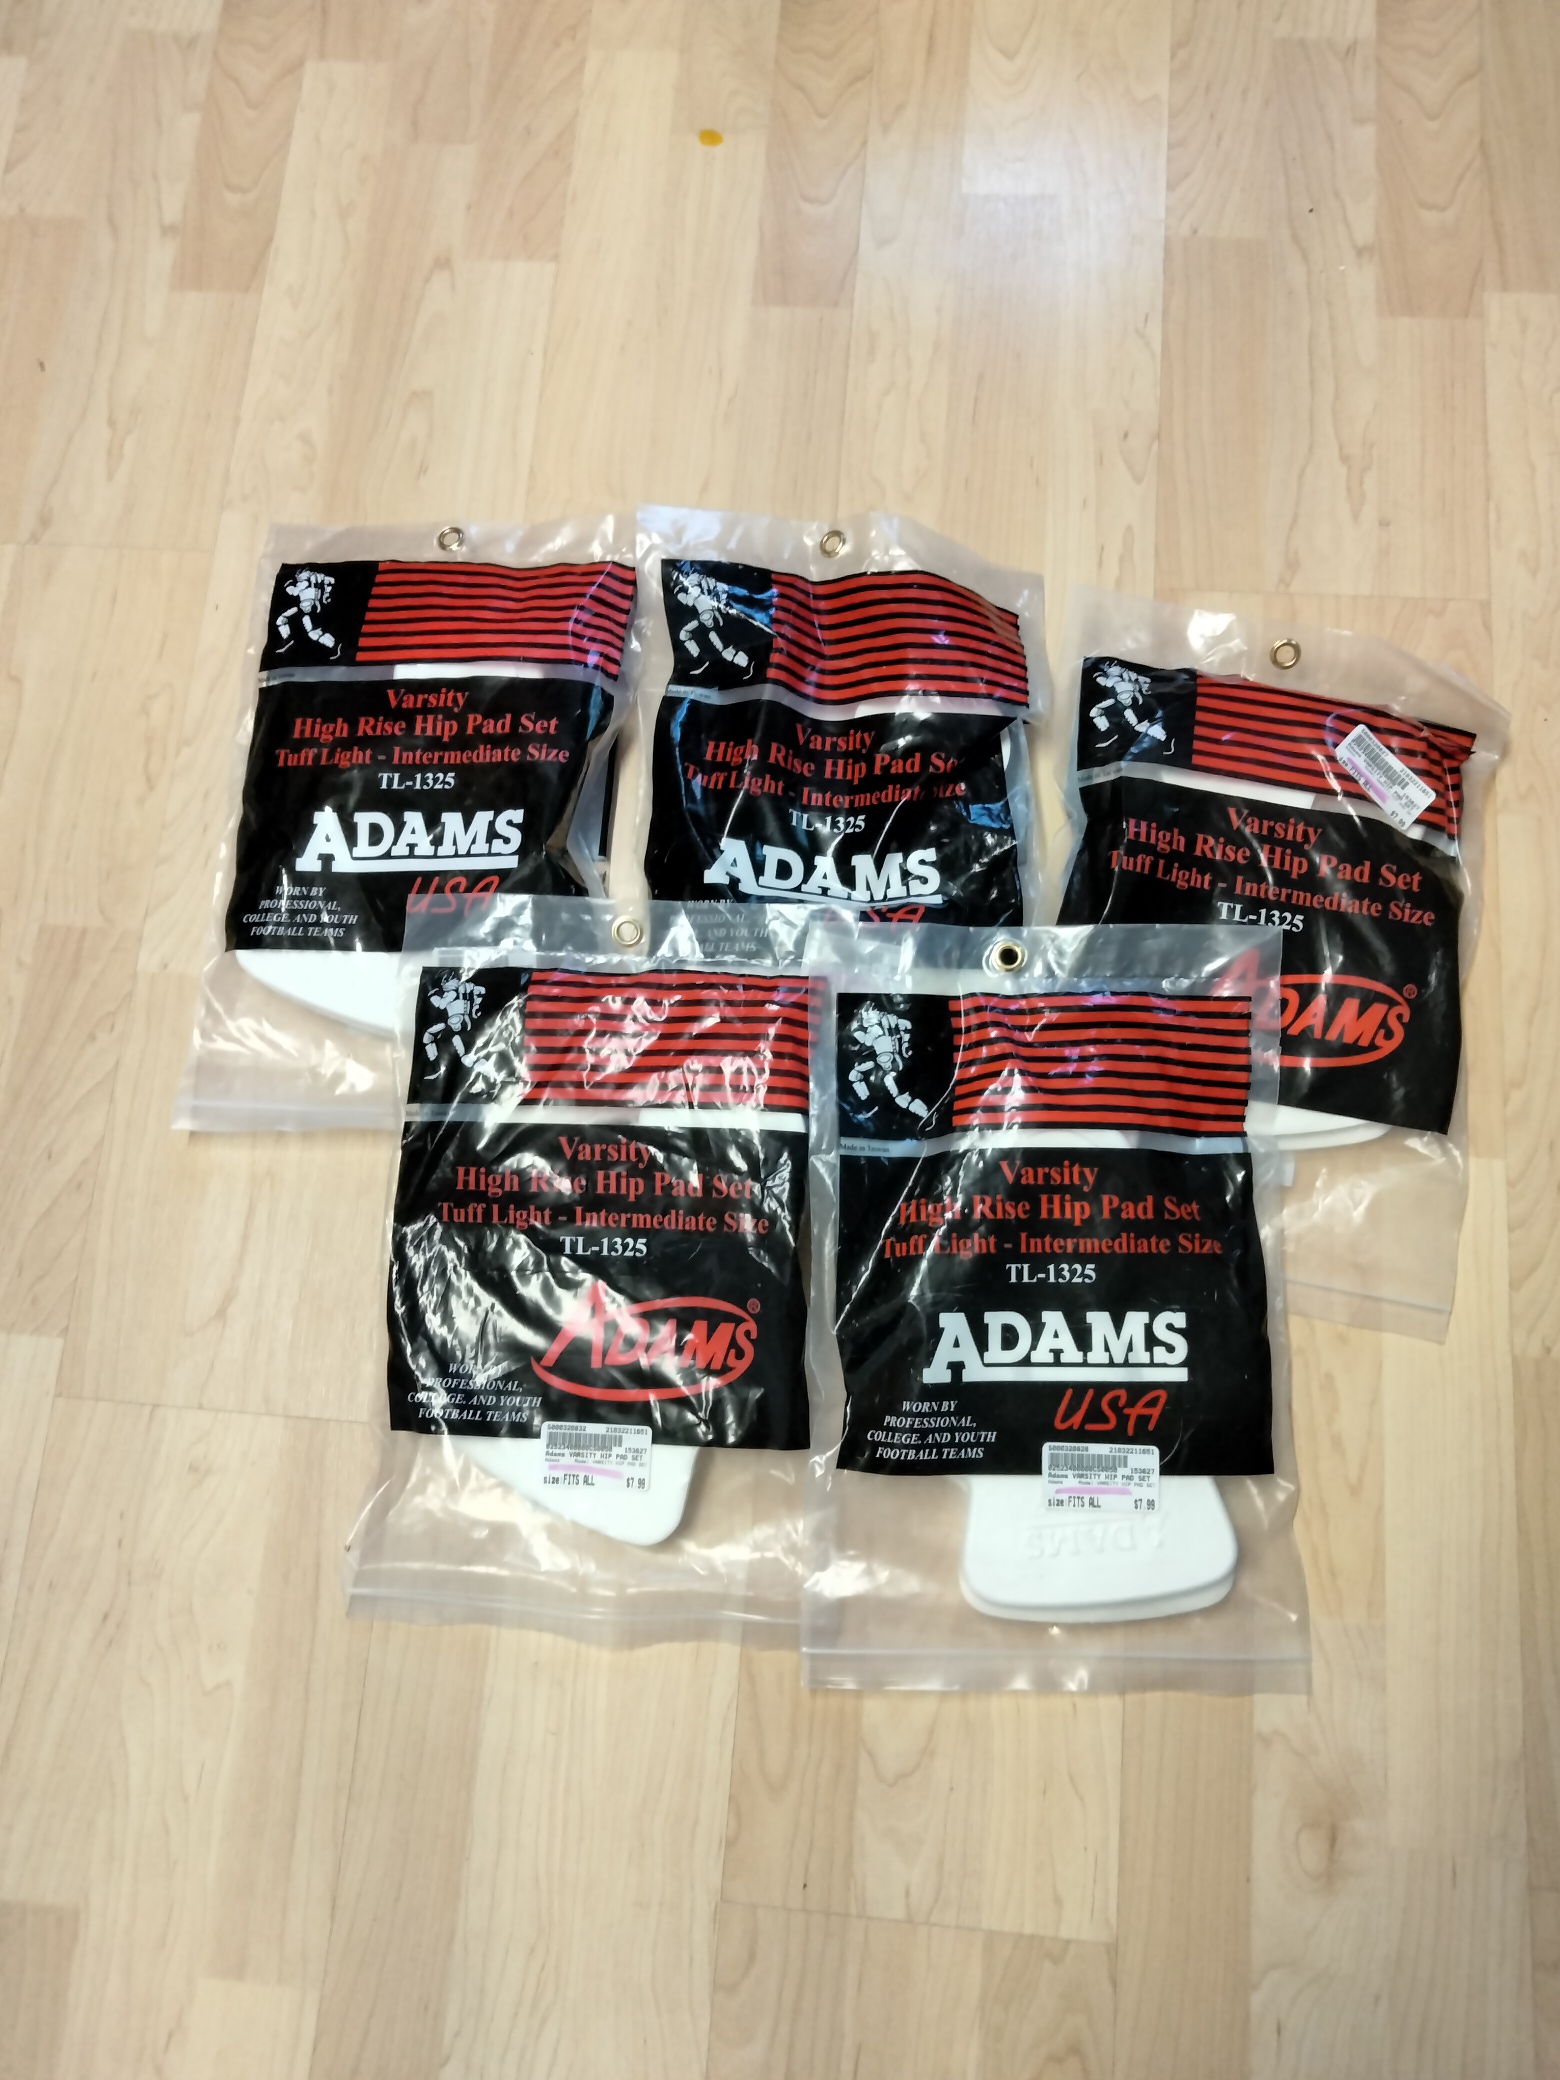 New Adult Large Adams Varsity high rise hip pad set